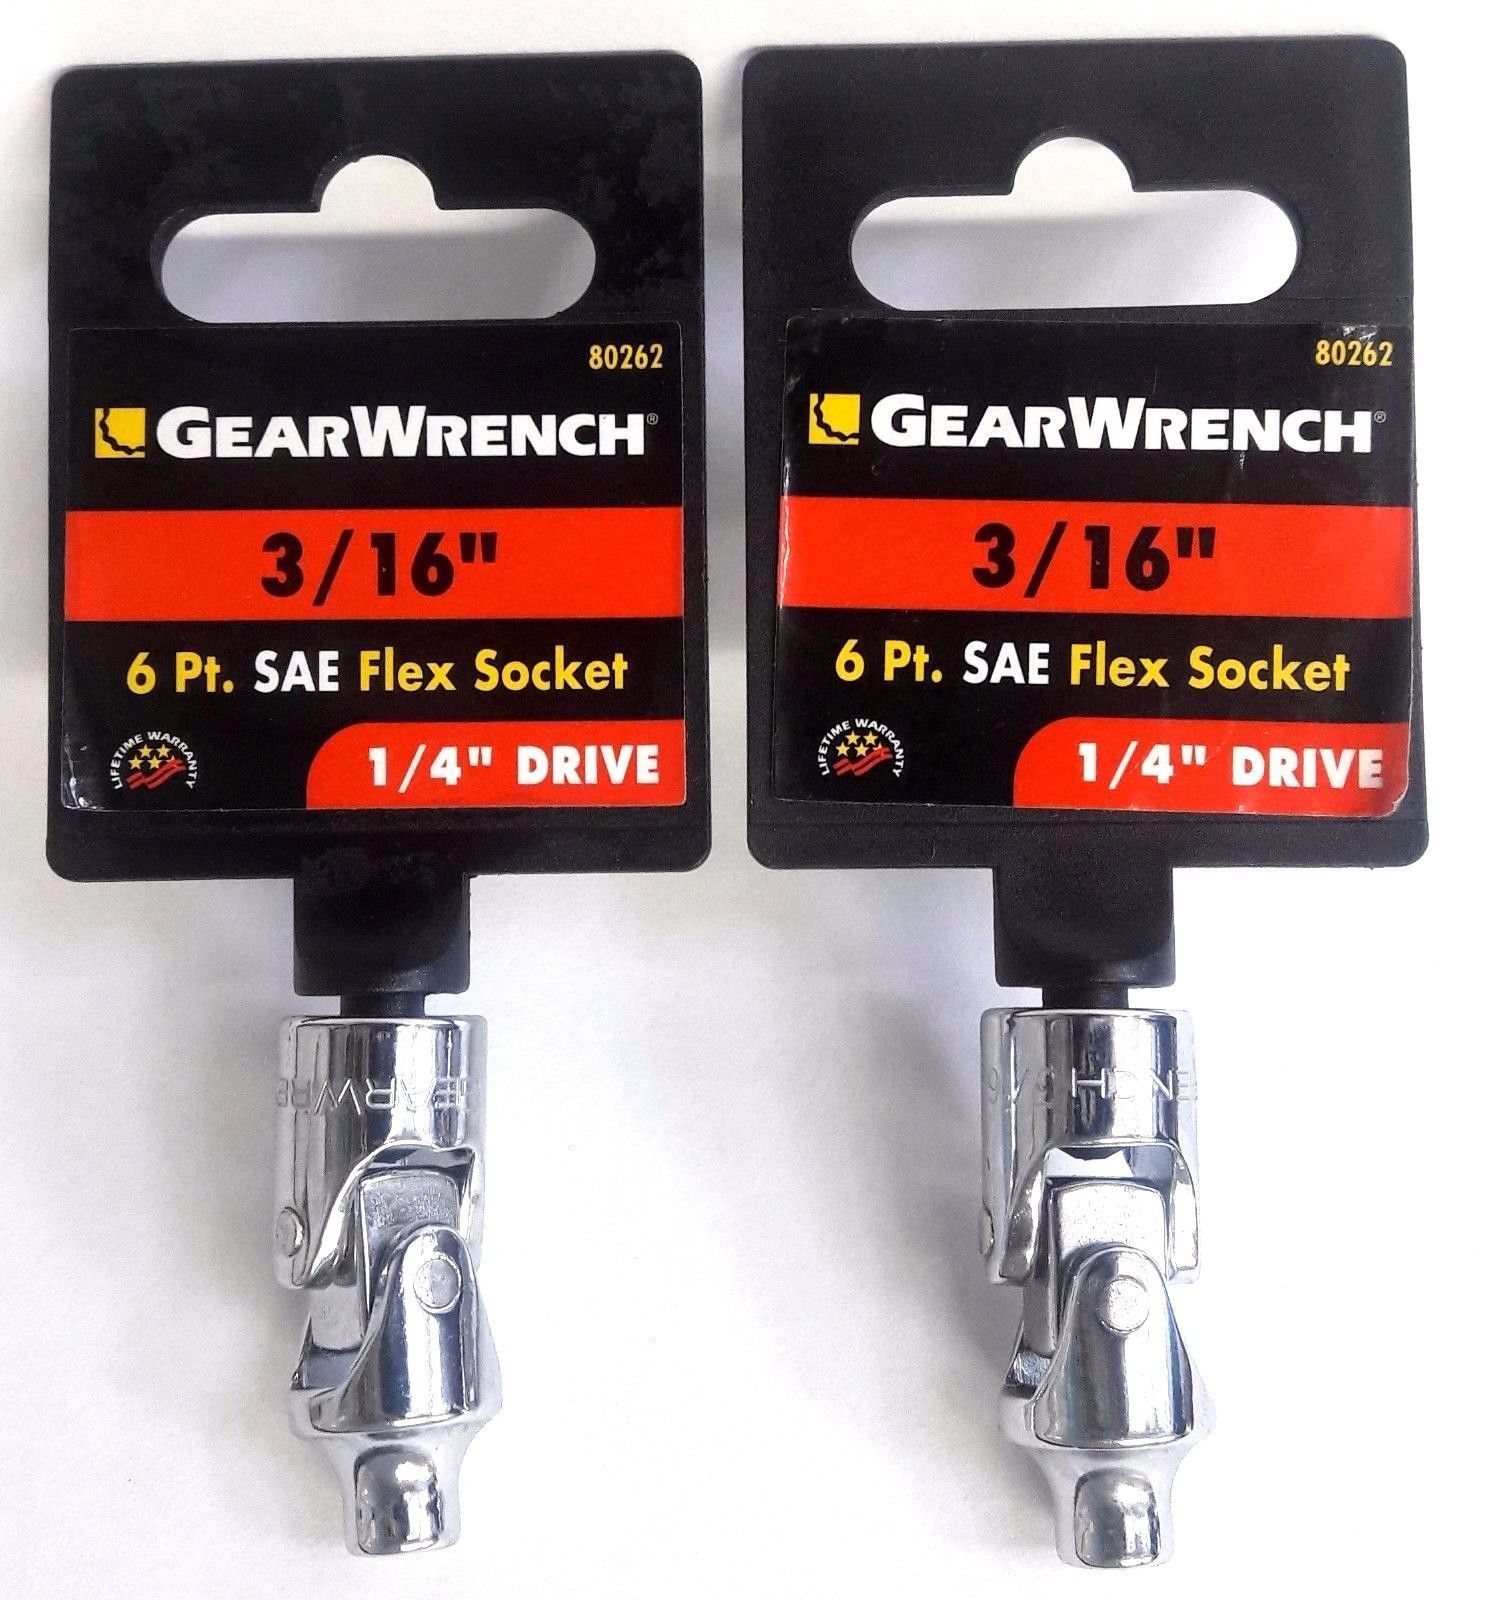 Geawrench 3/16" Flex Socket 1/4" Drive 80262 2PCS